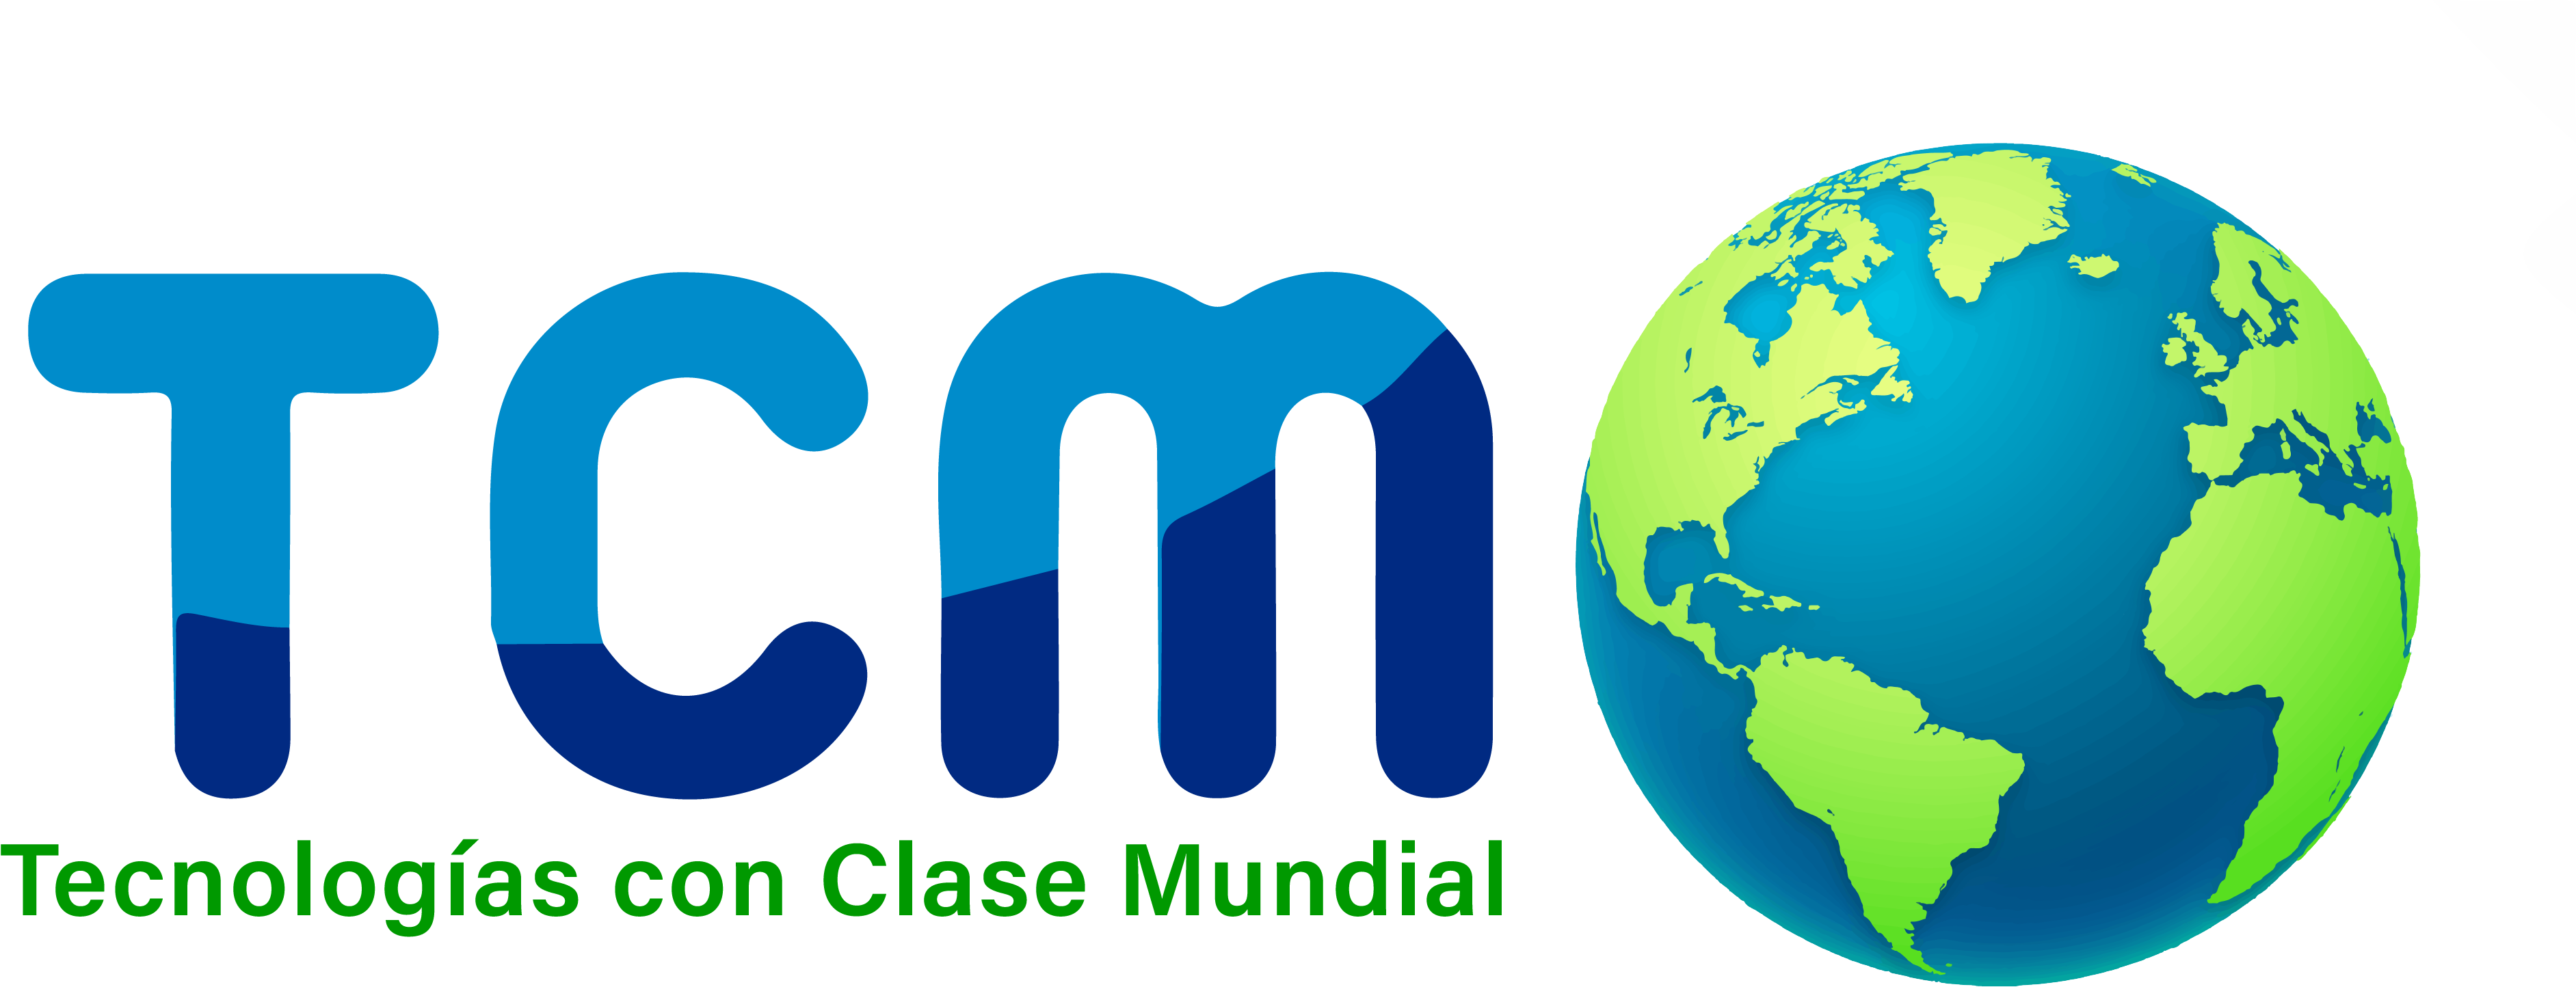 TCM TECNOLOGIAS CON CLASE MUNDIAL